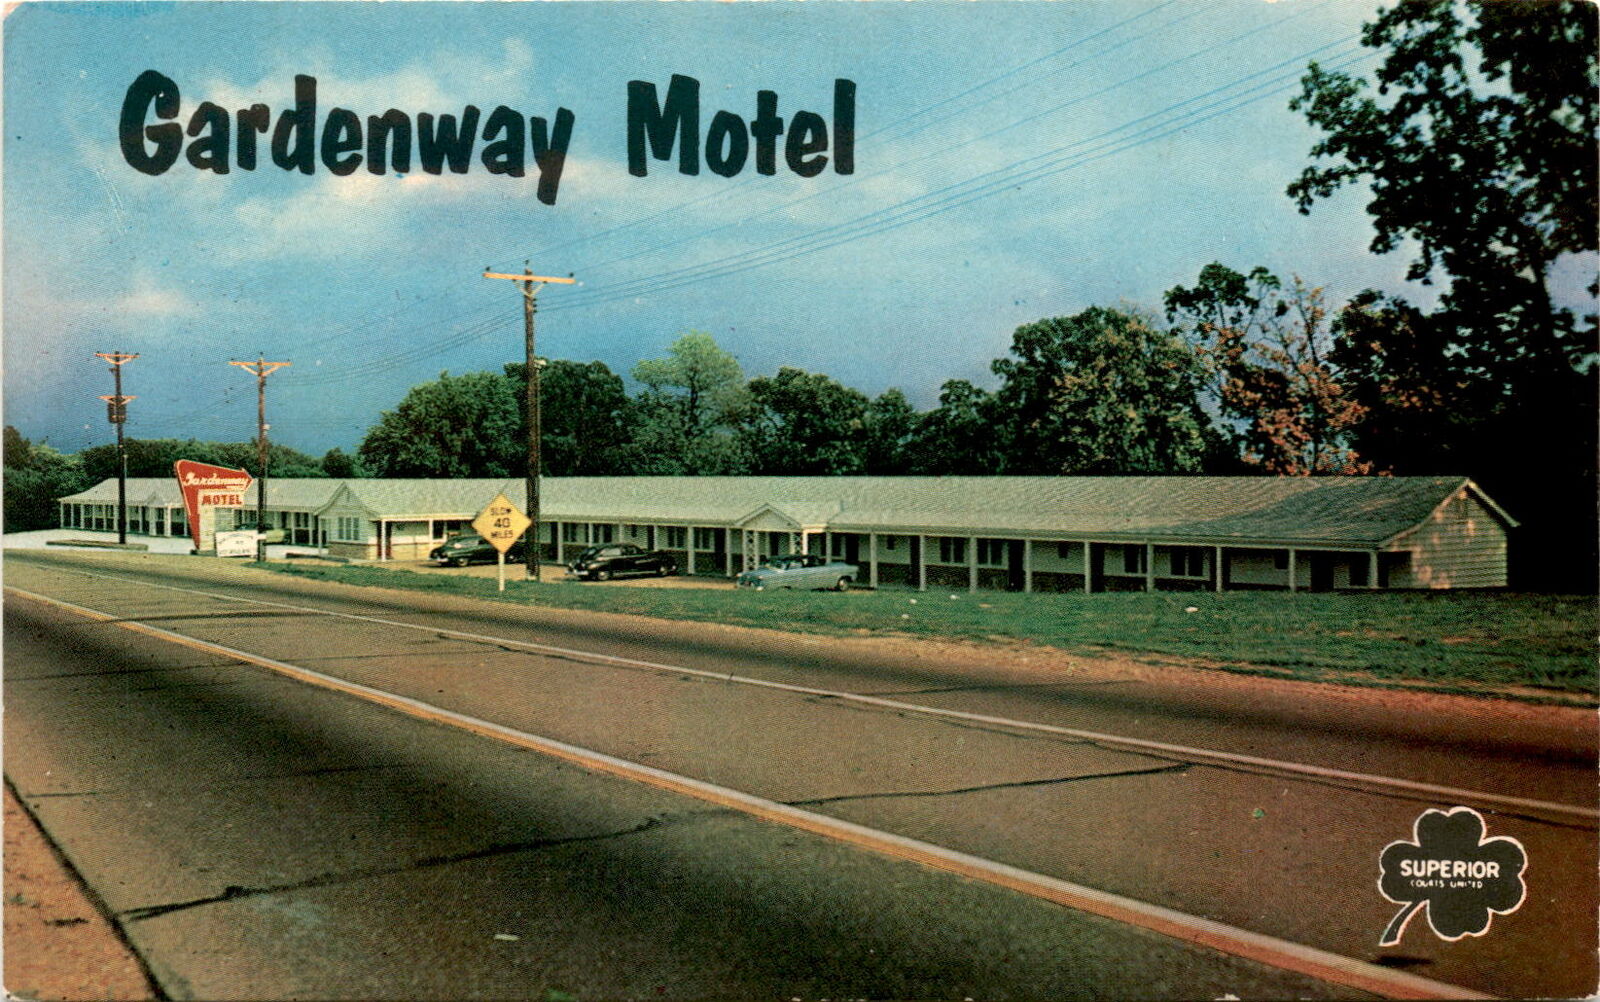 Gardenway Motel, Villa Ridge, Missouri, U.S. Route 66, U.S Postcard